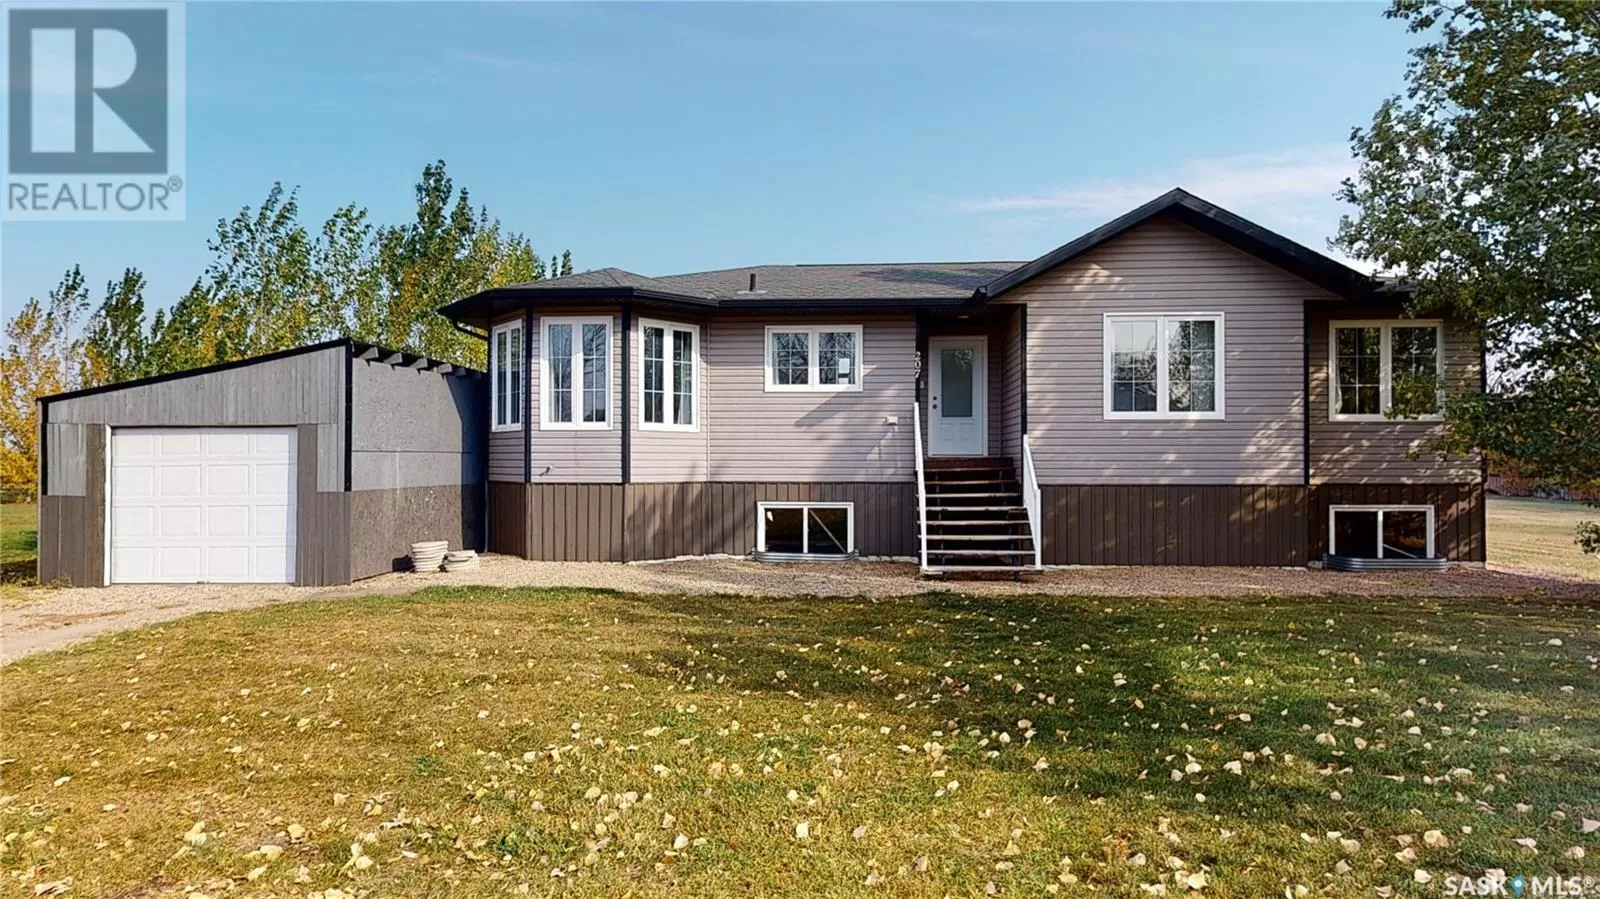 House for rent: 207 1st Street E, Alida, Saskatchewan S0C 0B0